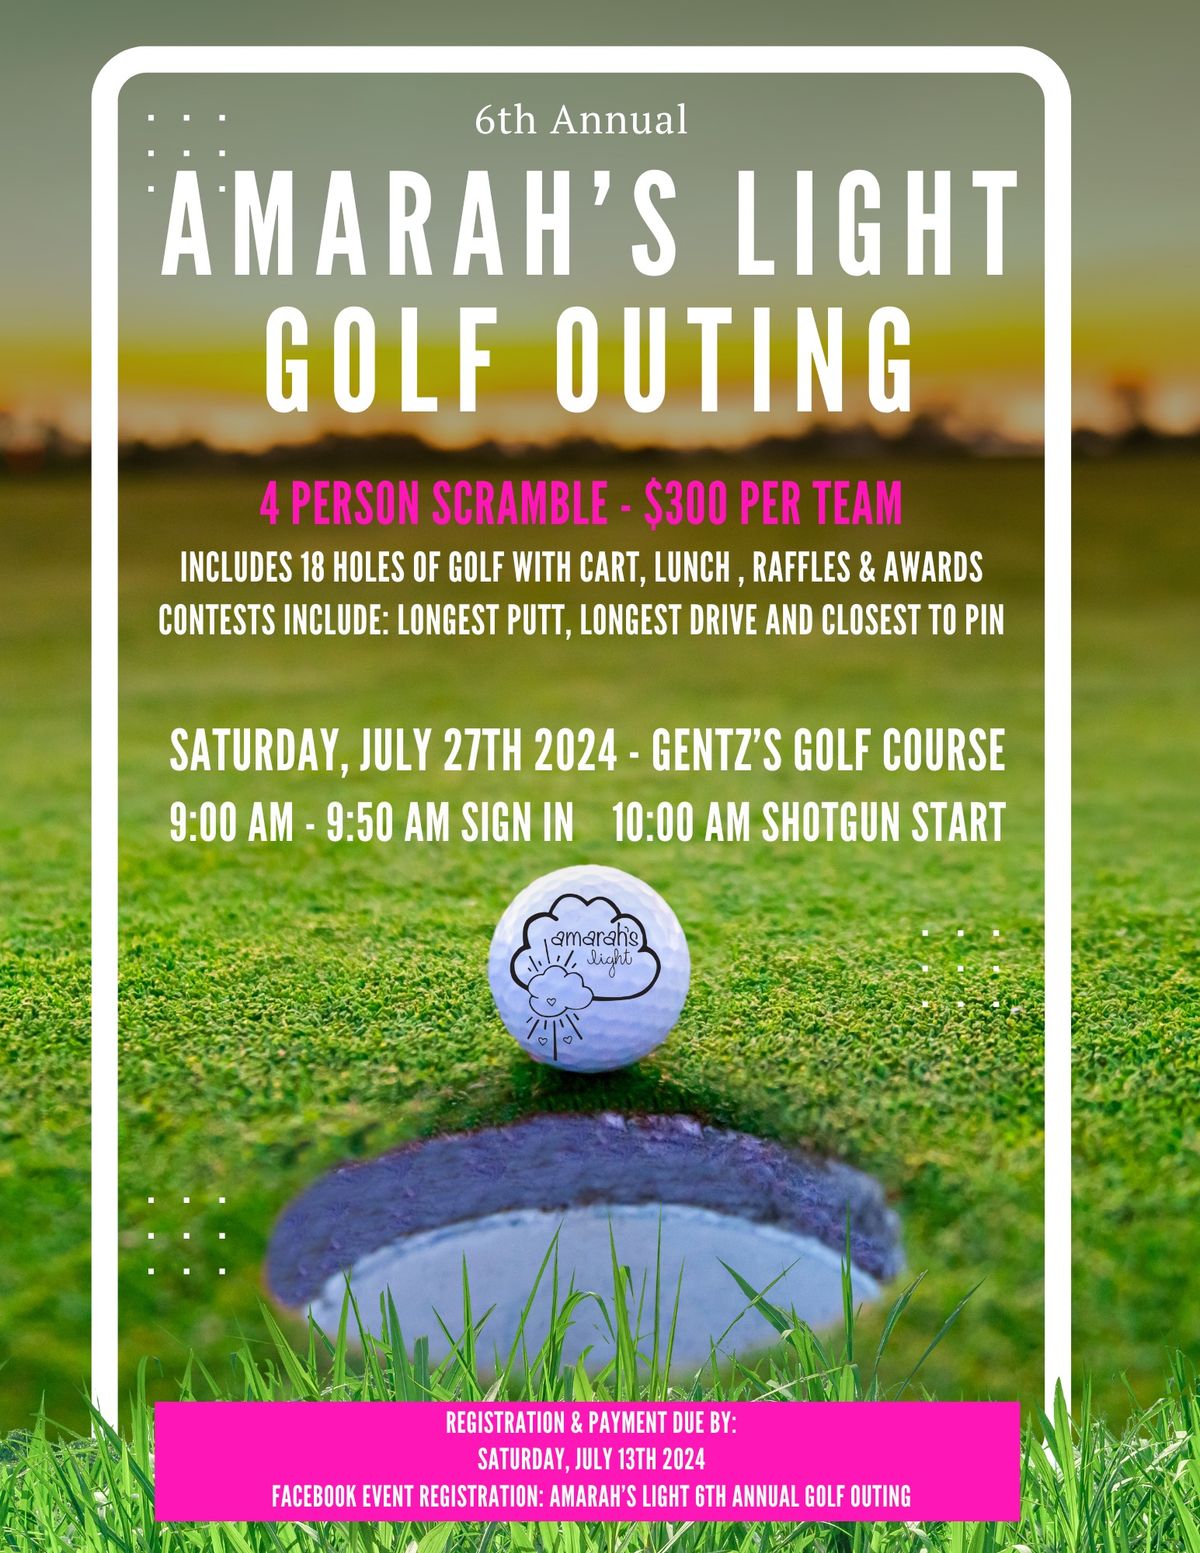 Amarah's Light 6th Annual Golf Outing